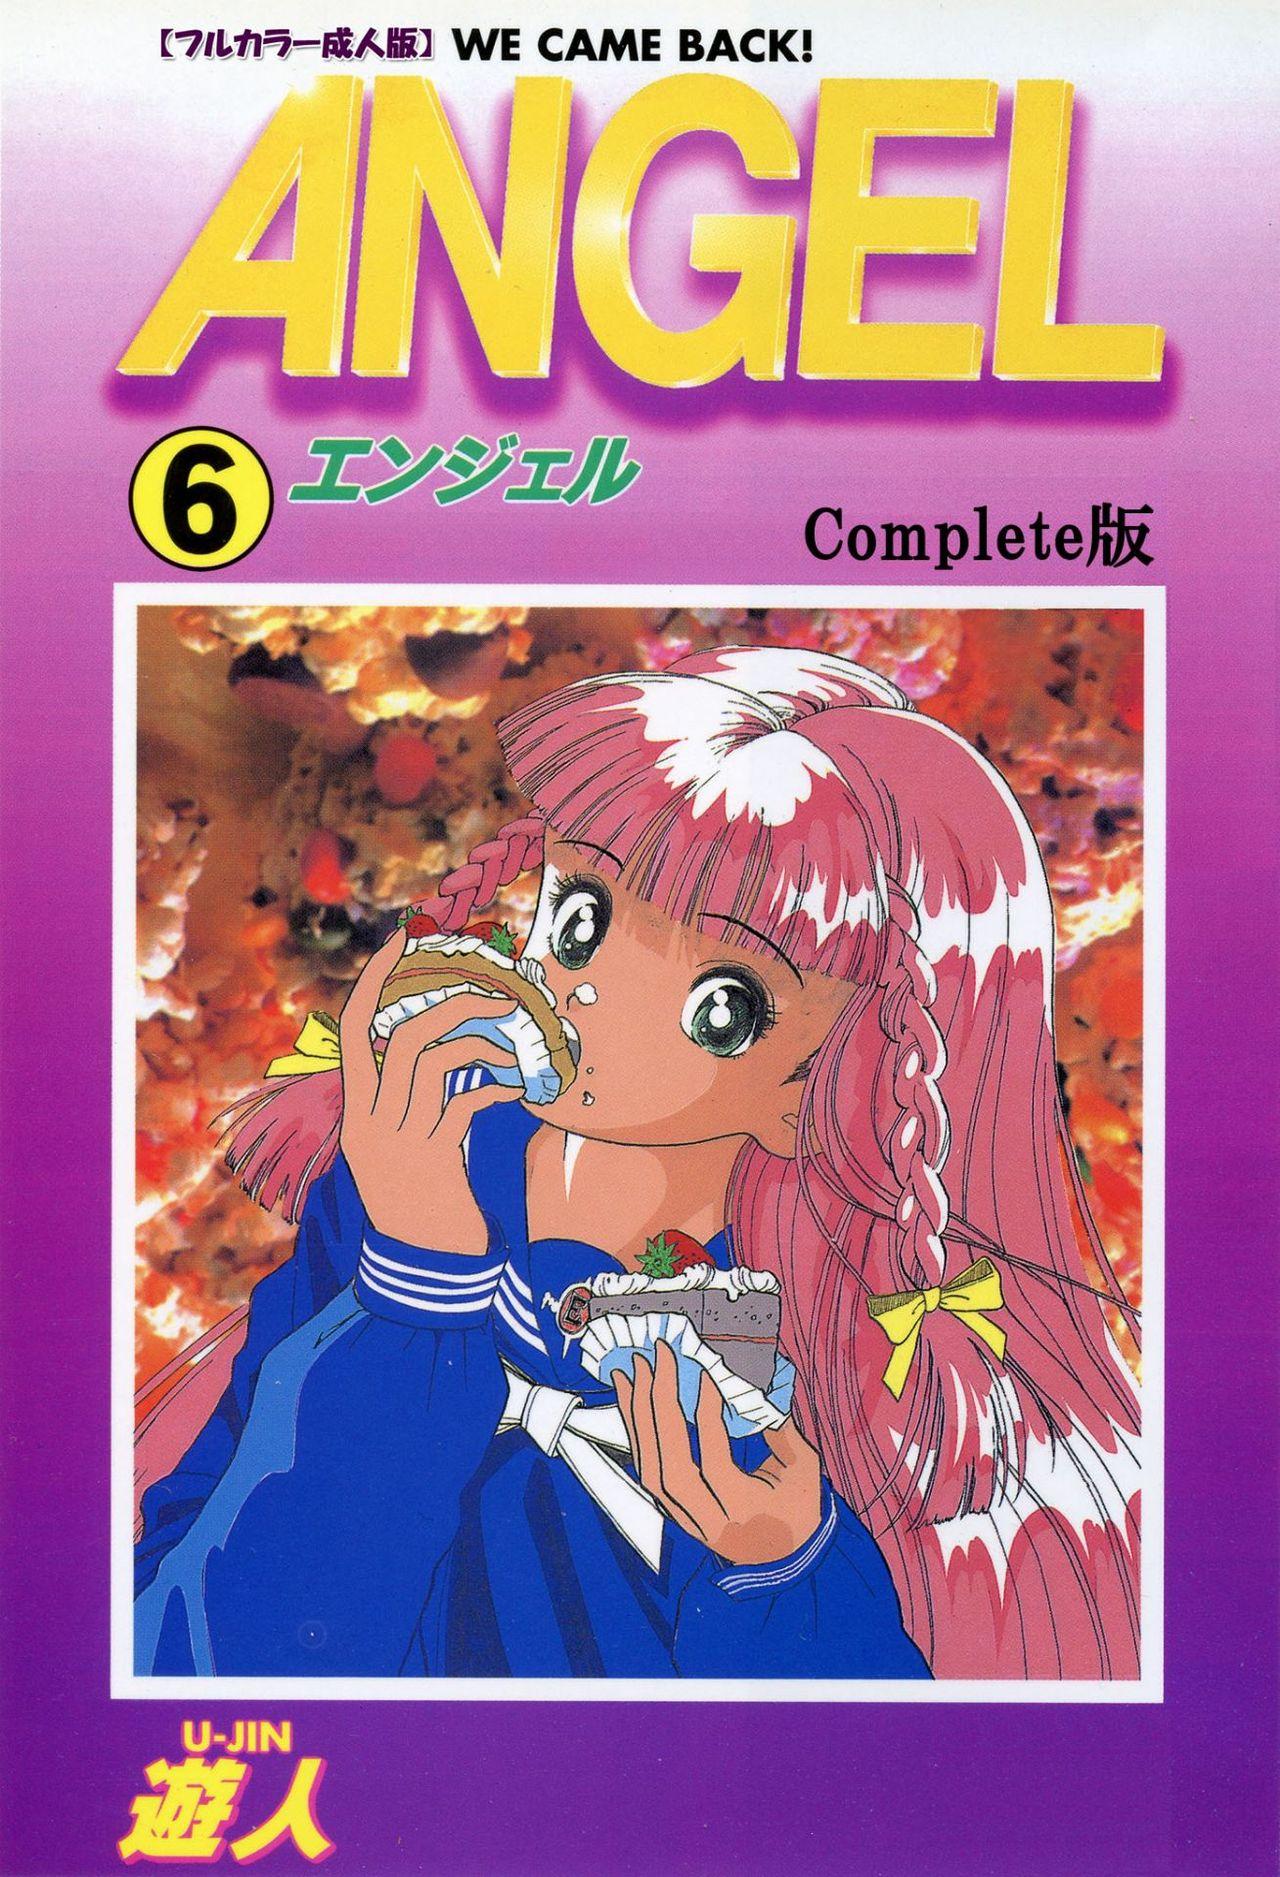 Gordita ANGEL 6 Completeban Casal - Picture 1